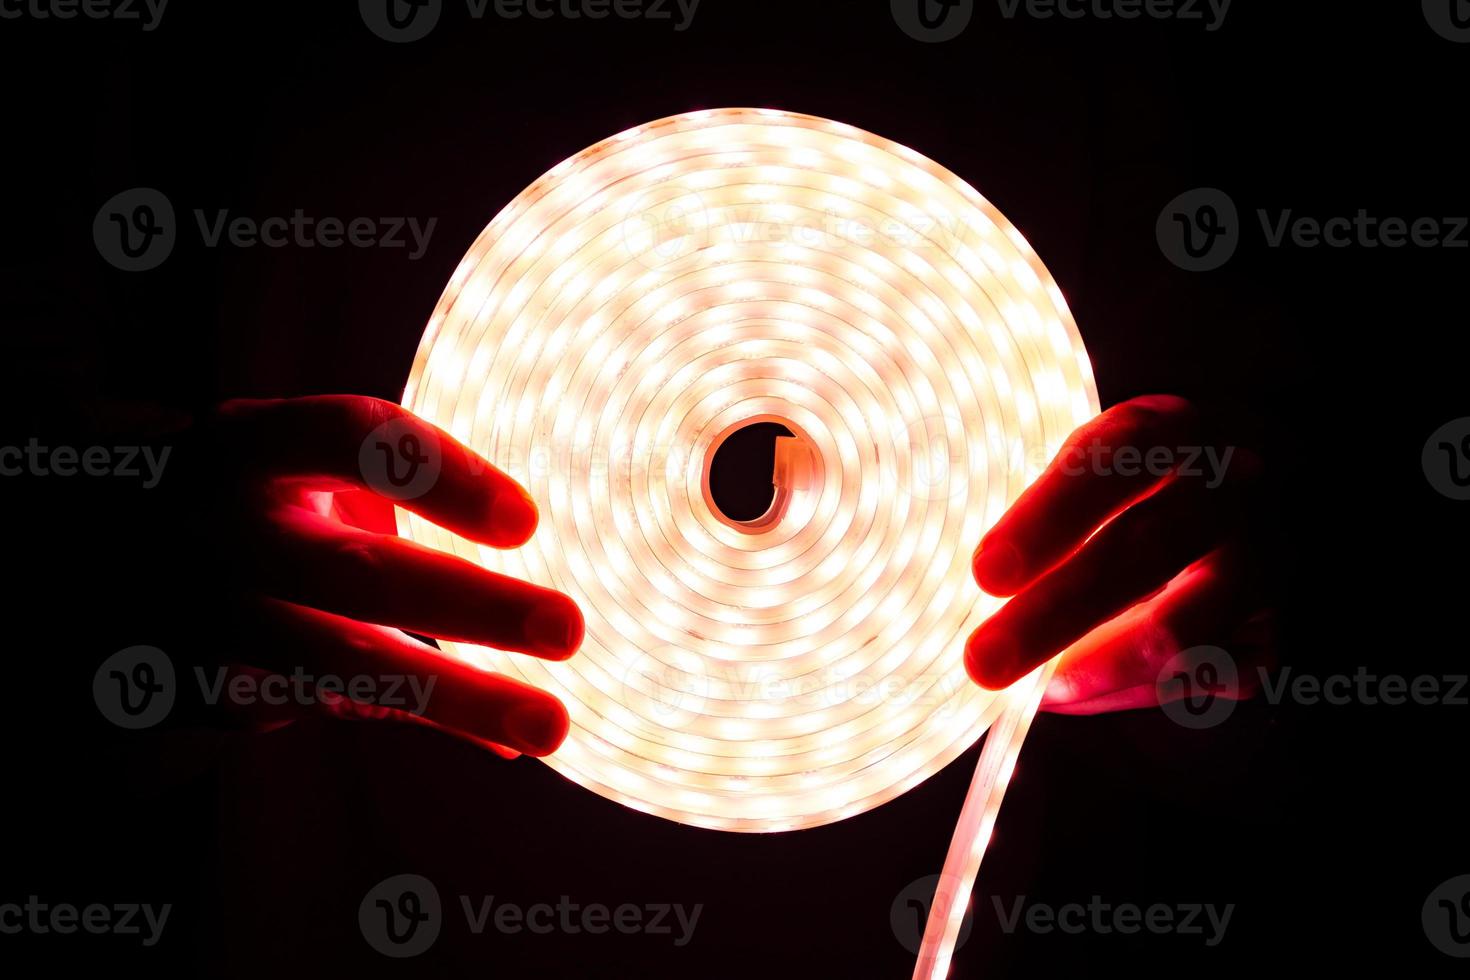 striscia luminosa a led, illuminazione a diodo a bobina rossa in mano foto